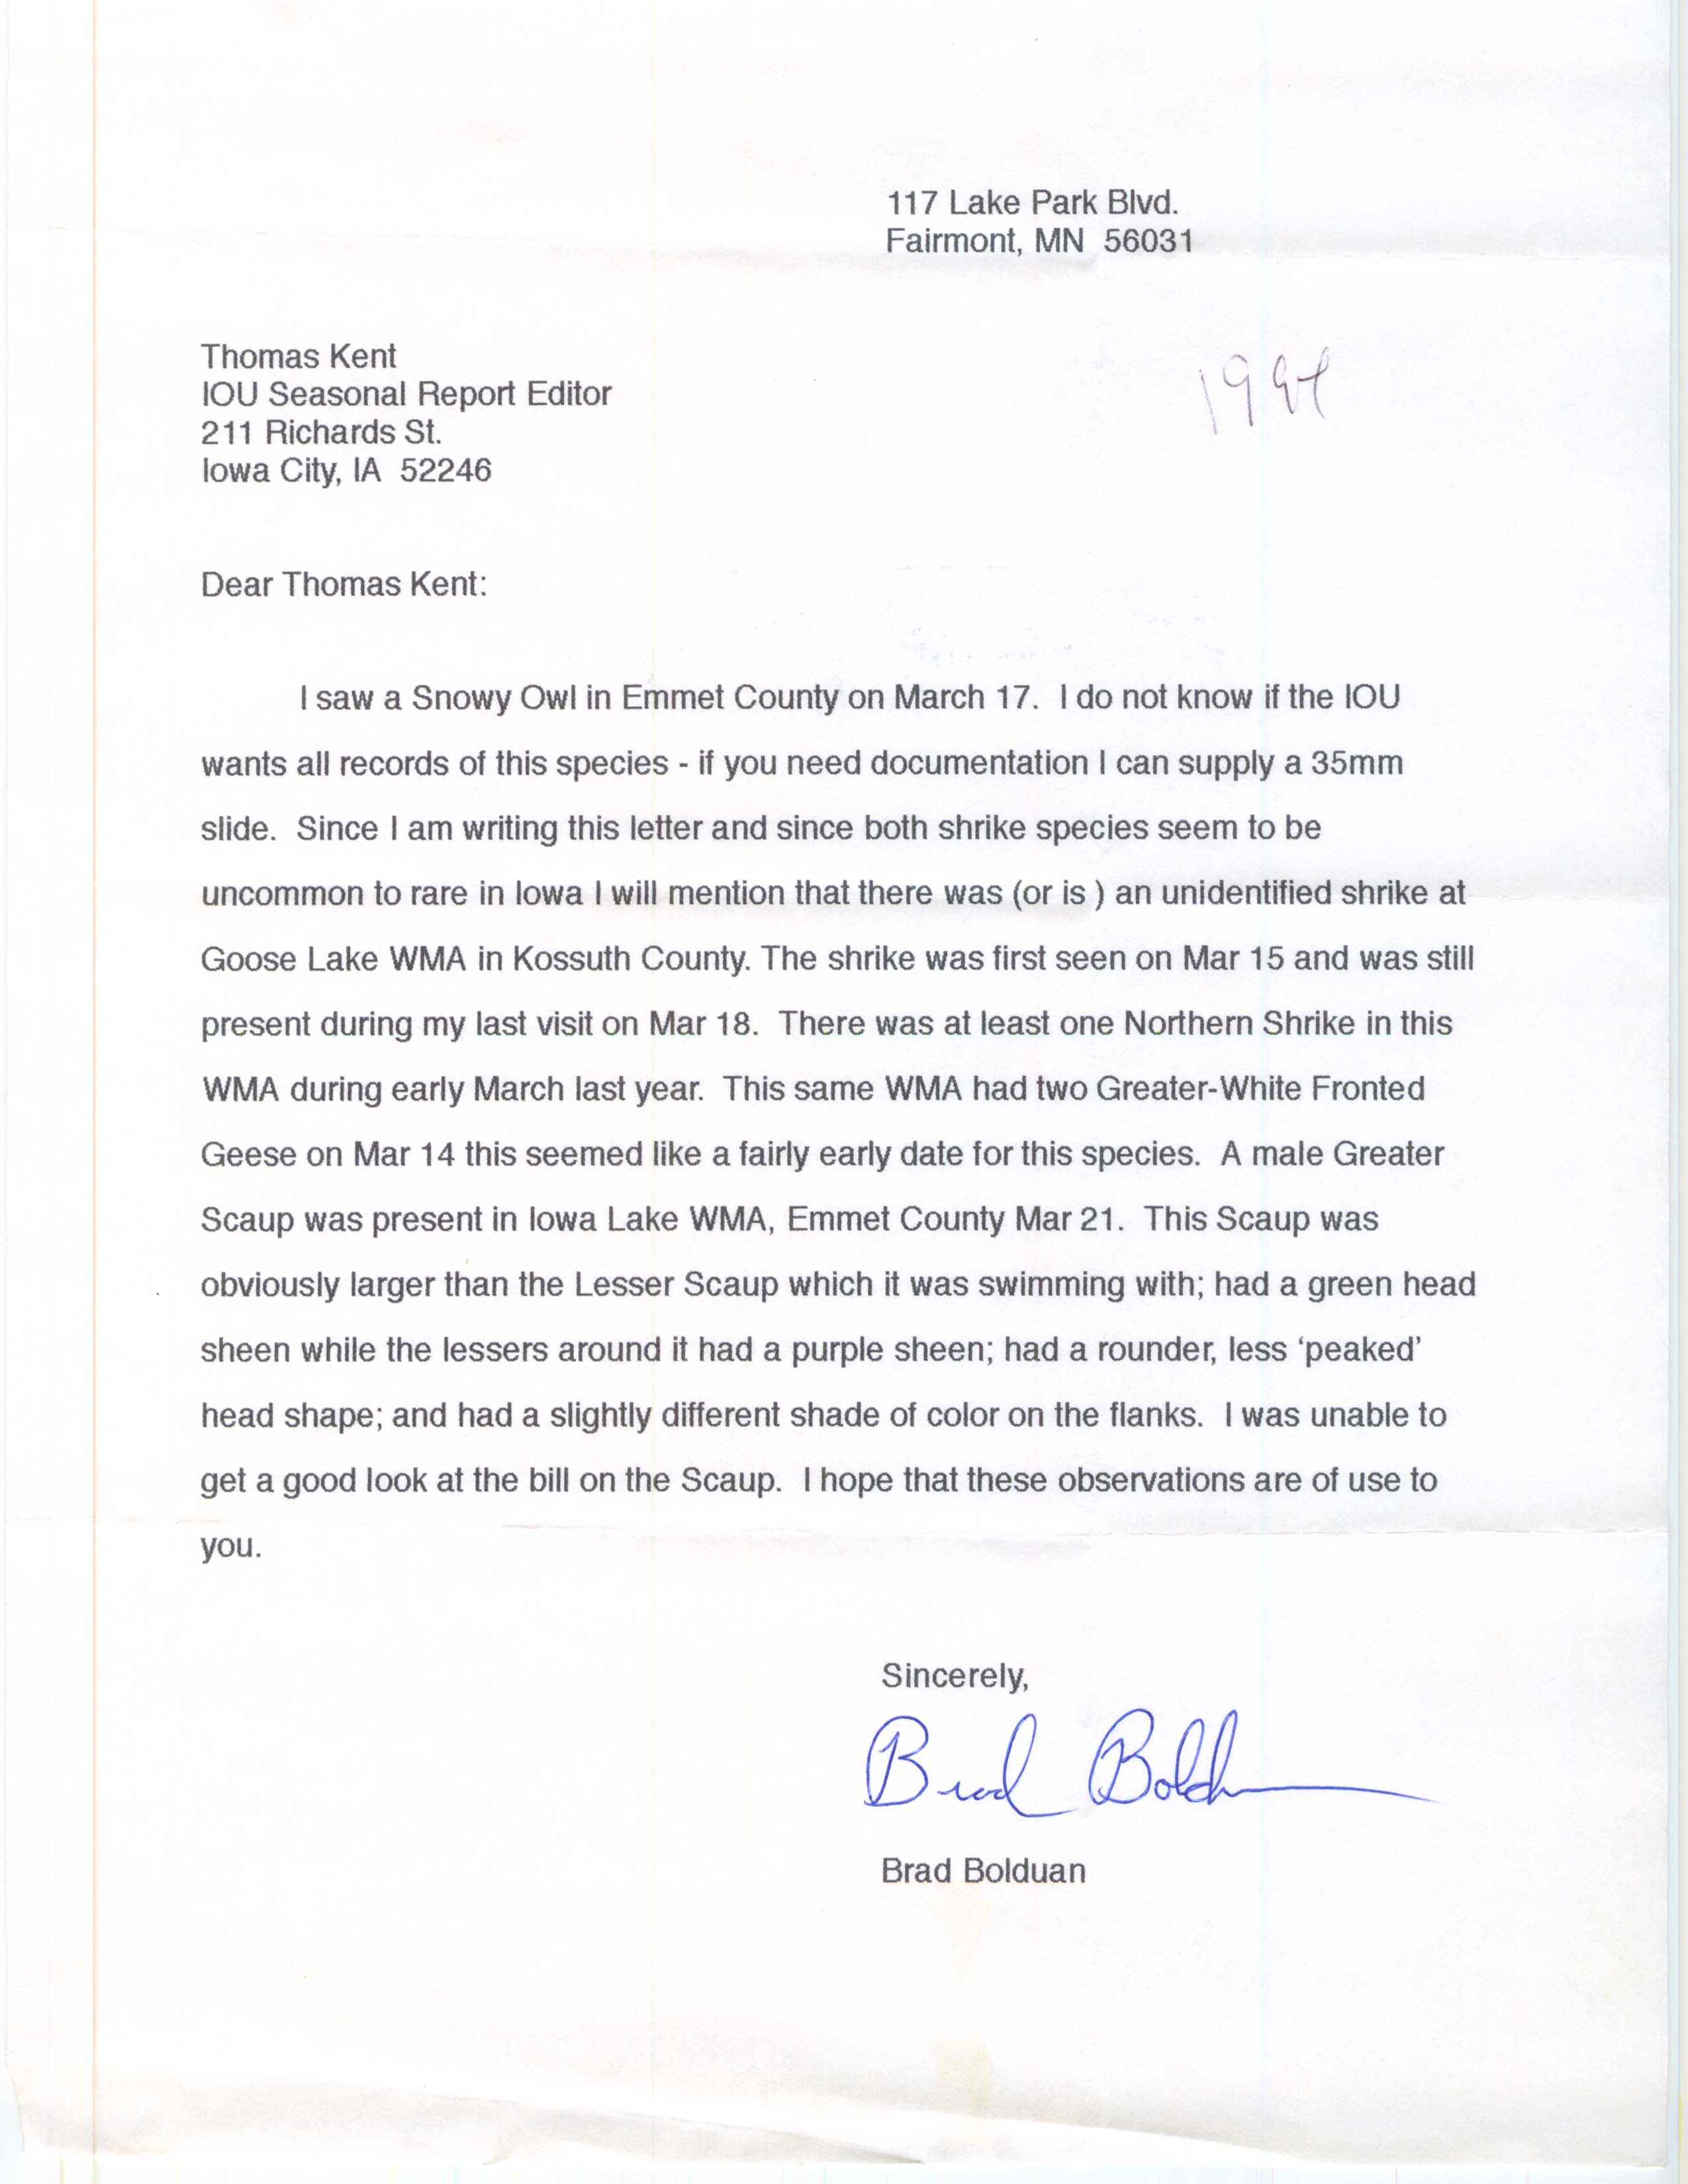 Brad Bolduan letter to Thomas Kent regarding notable bird sightings including the Snowy Owl, 1994